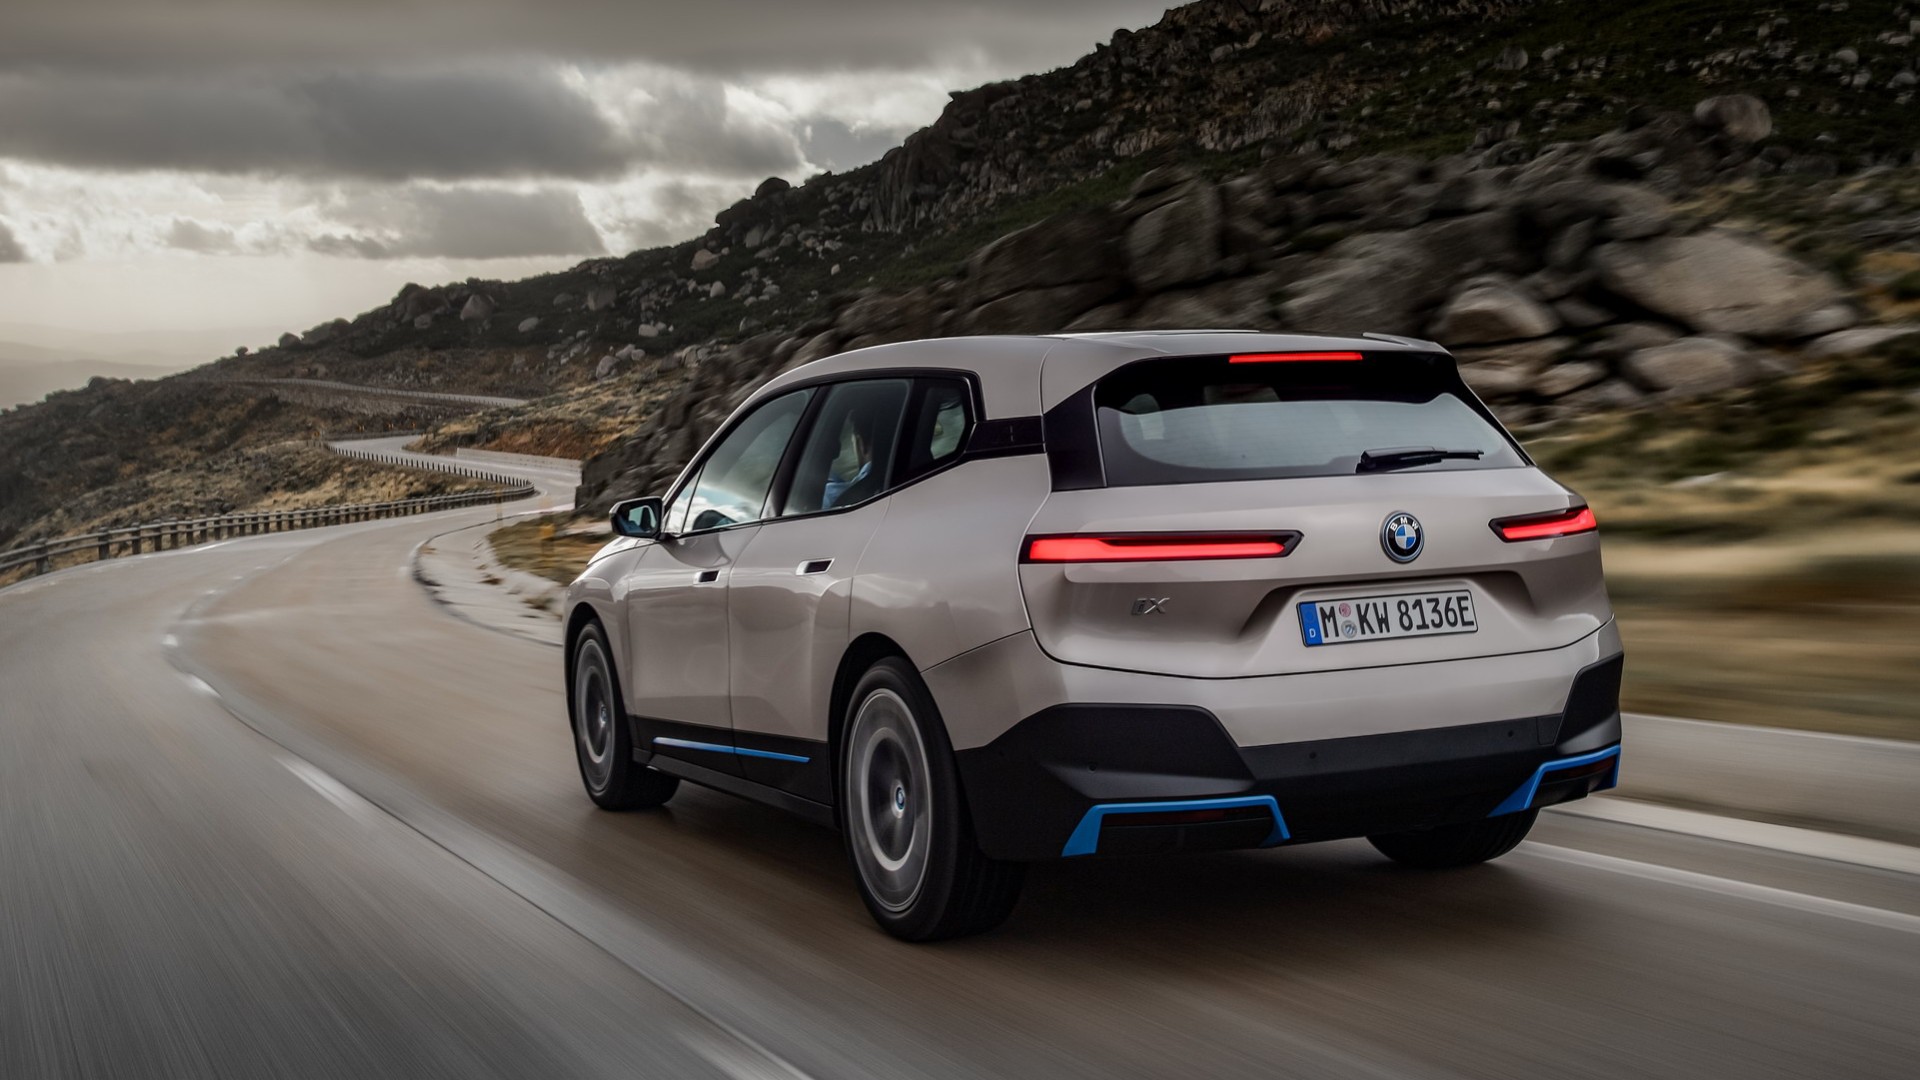 BMW: Μειώνει την γκάμα της και επενδύει στην ηλεκτροκίνηση